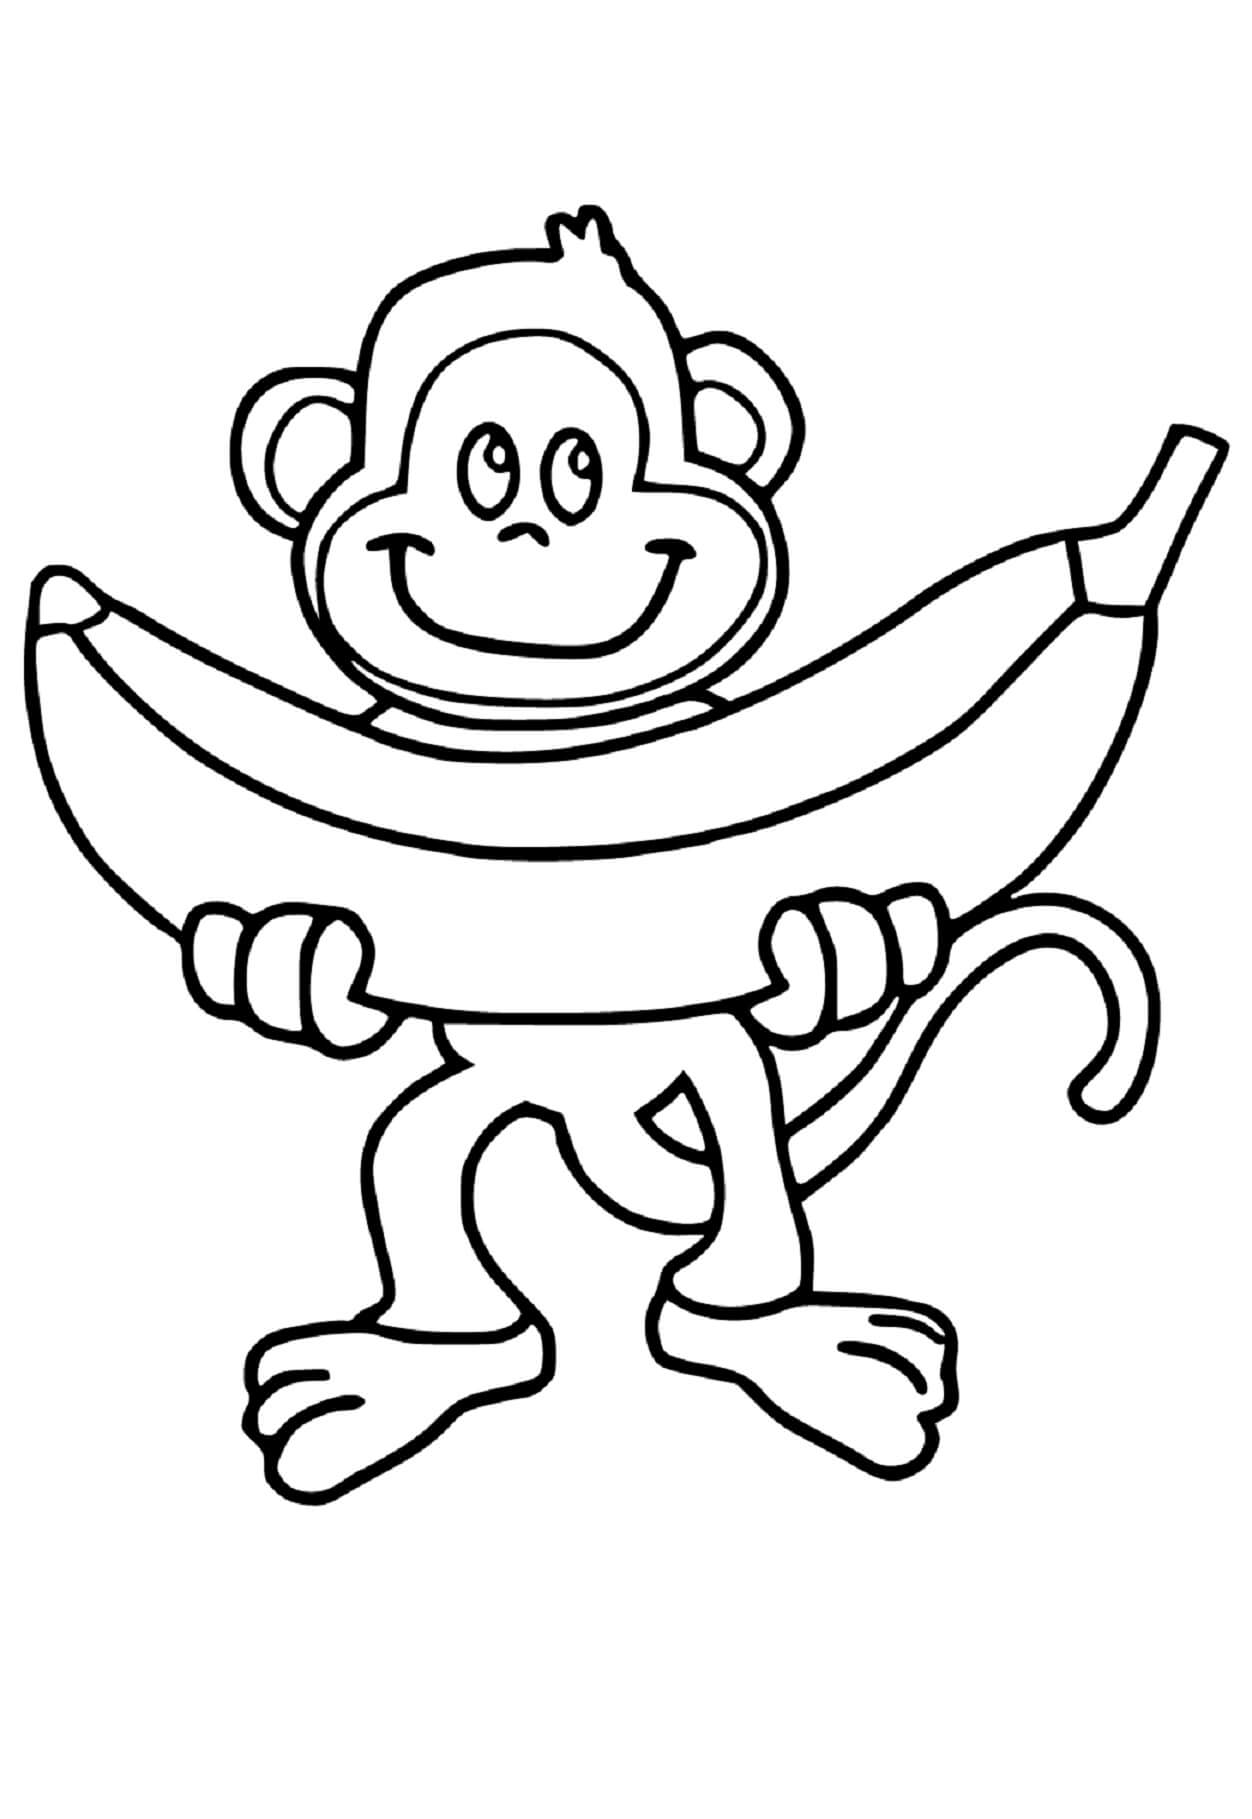 Monkey holding banana coloring page